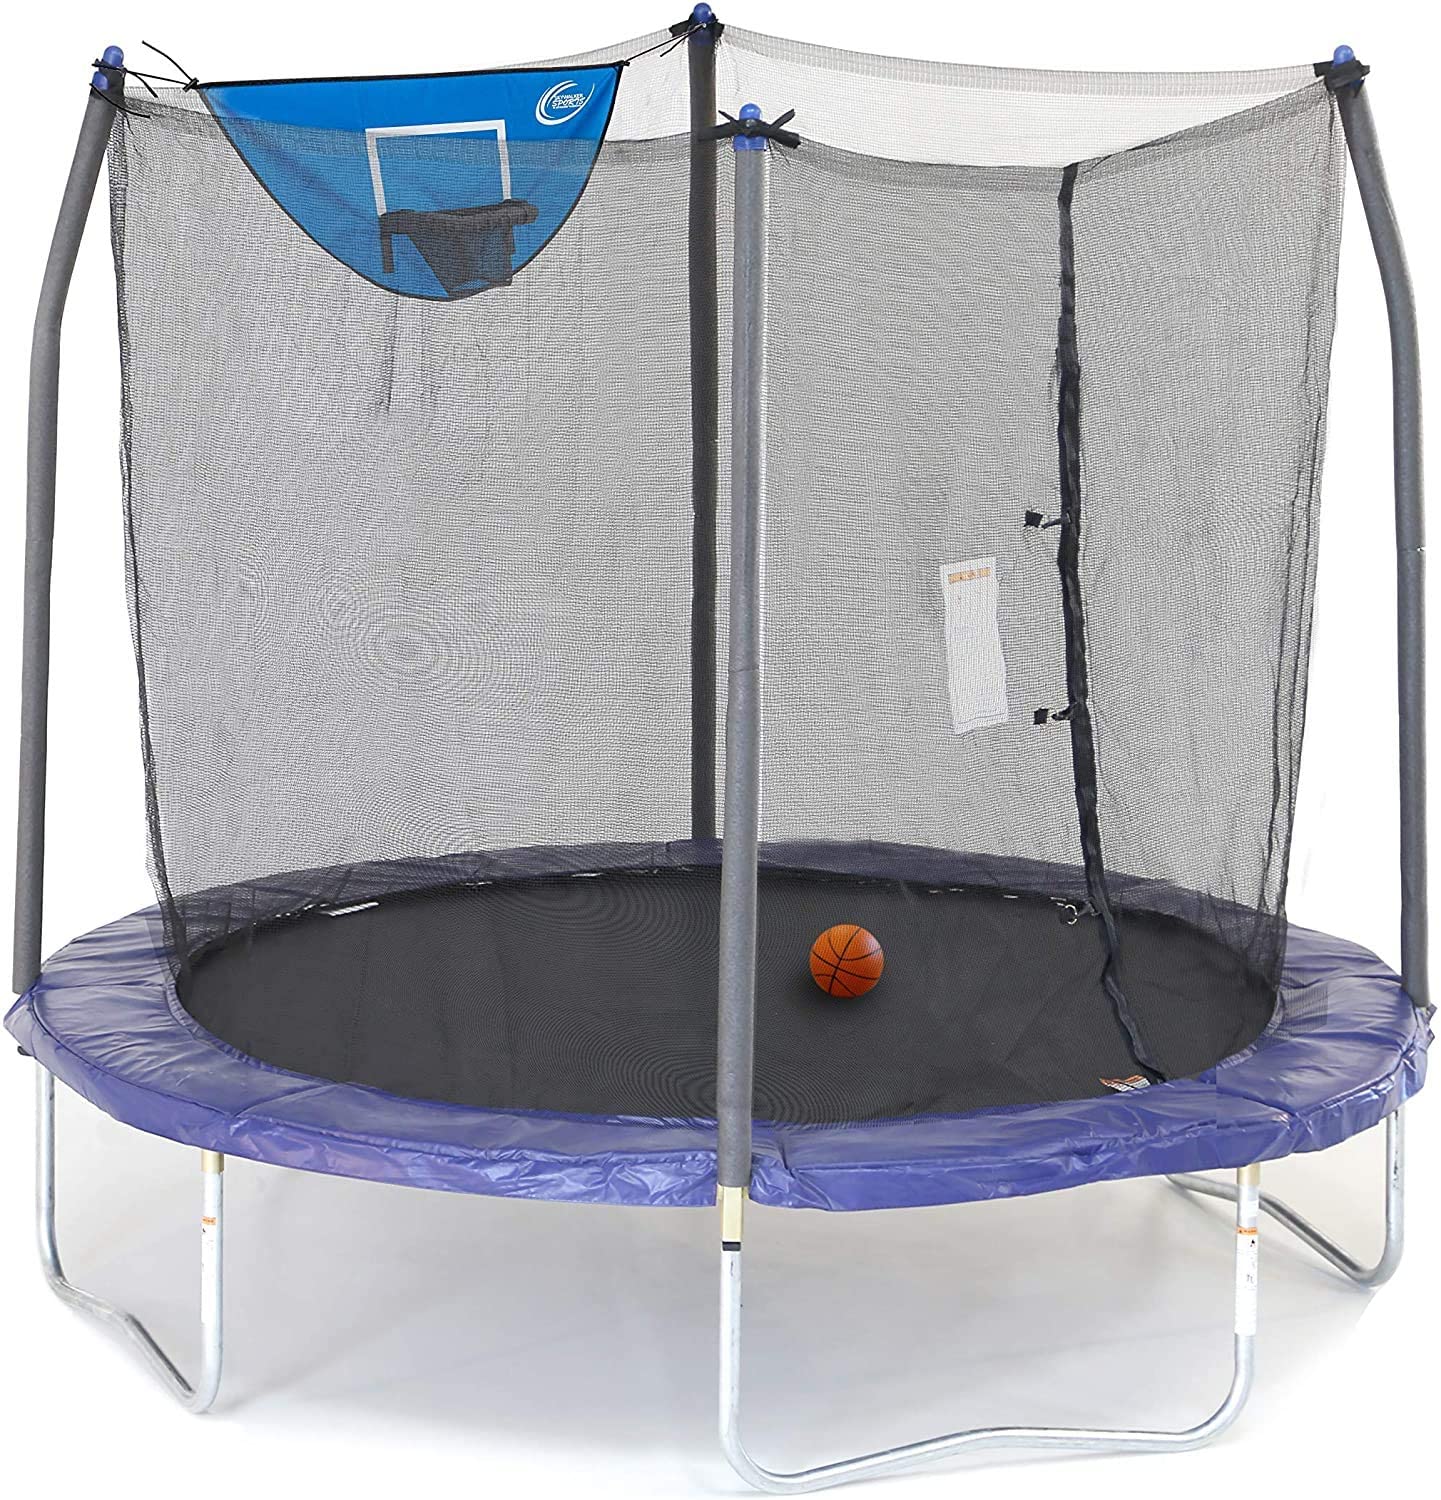 8' Skywalker Trampolines Jump N’ Dunk Trampoline w/ Enclosure Net (Blue) $103.16 + Free Shipping